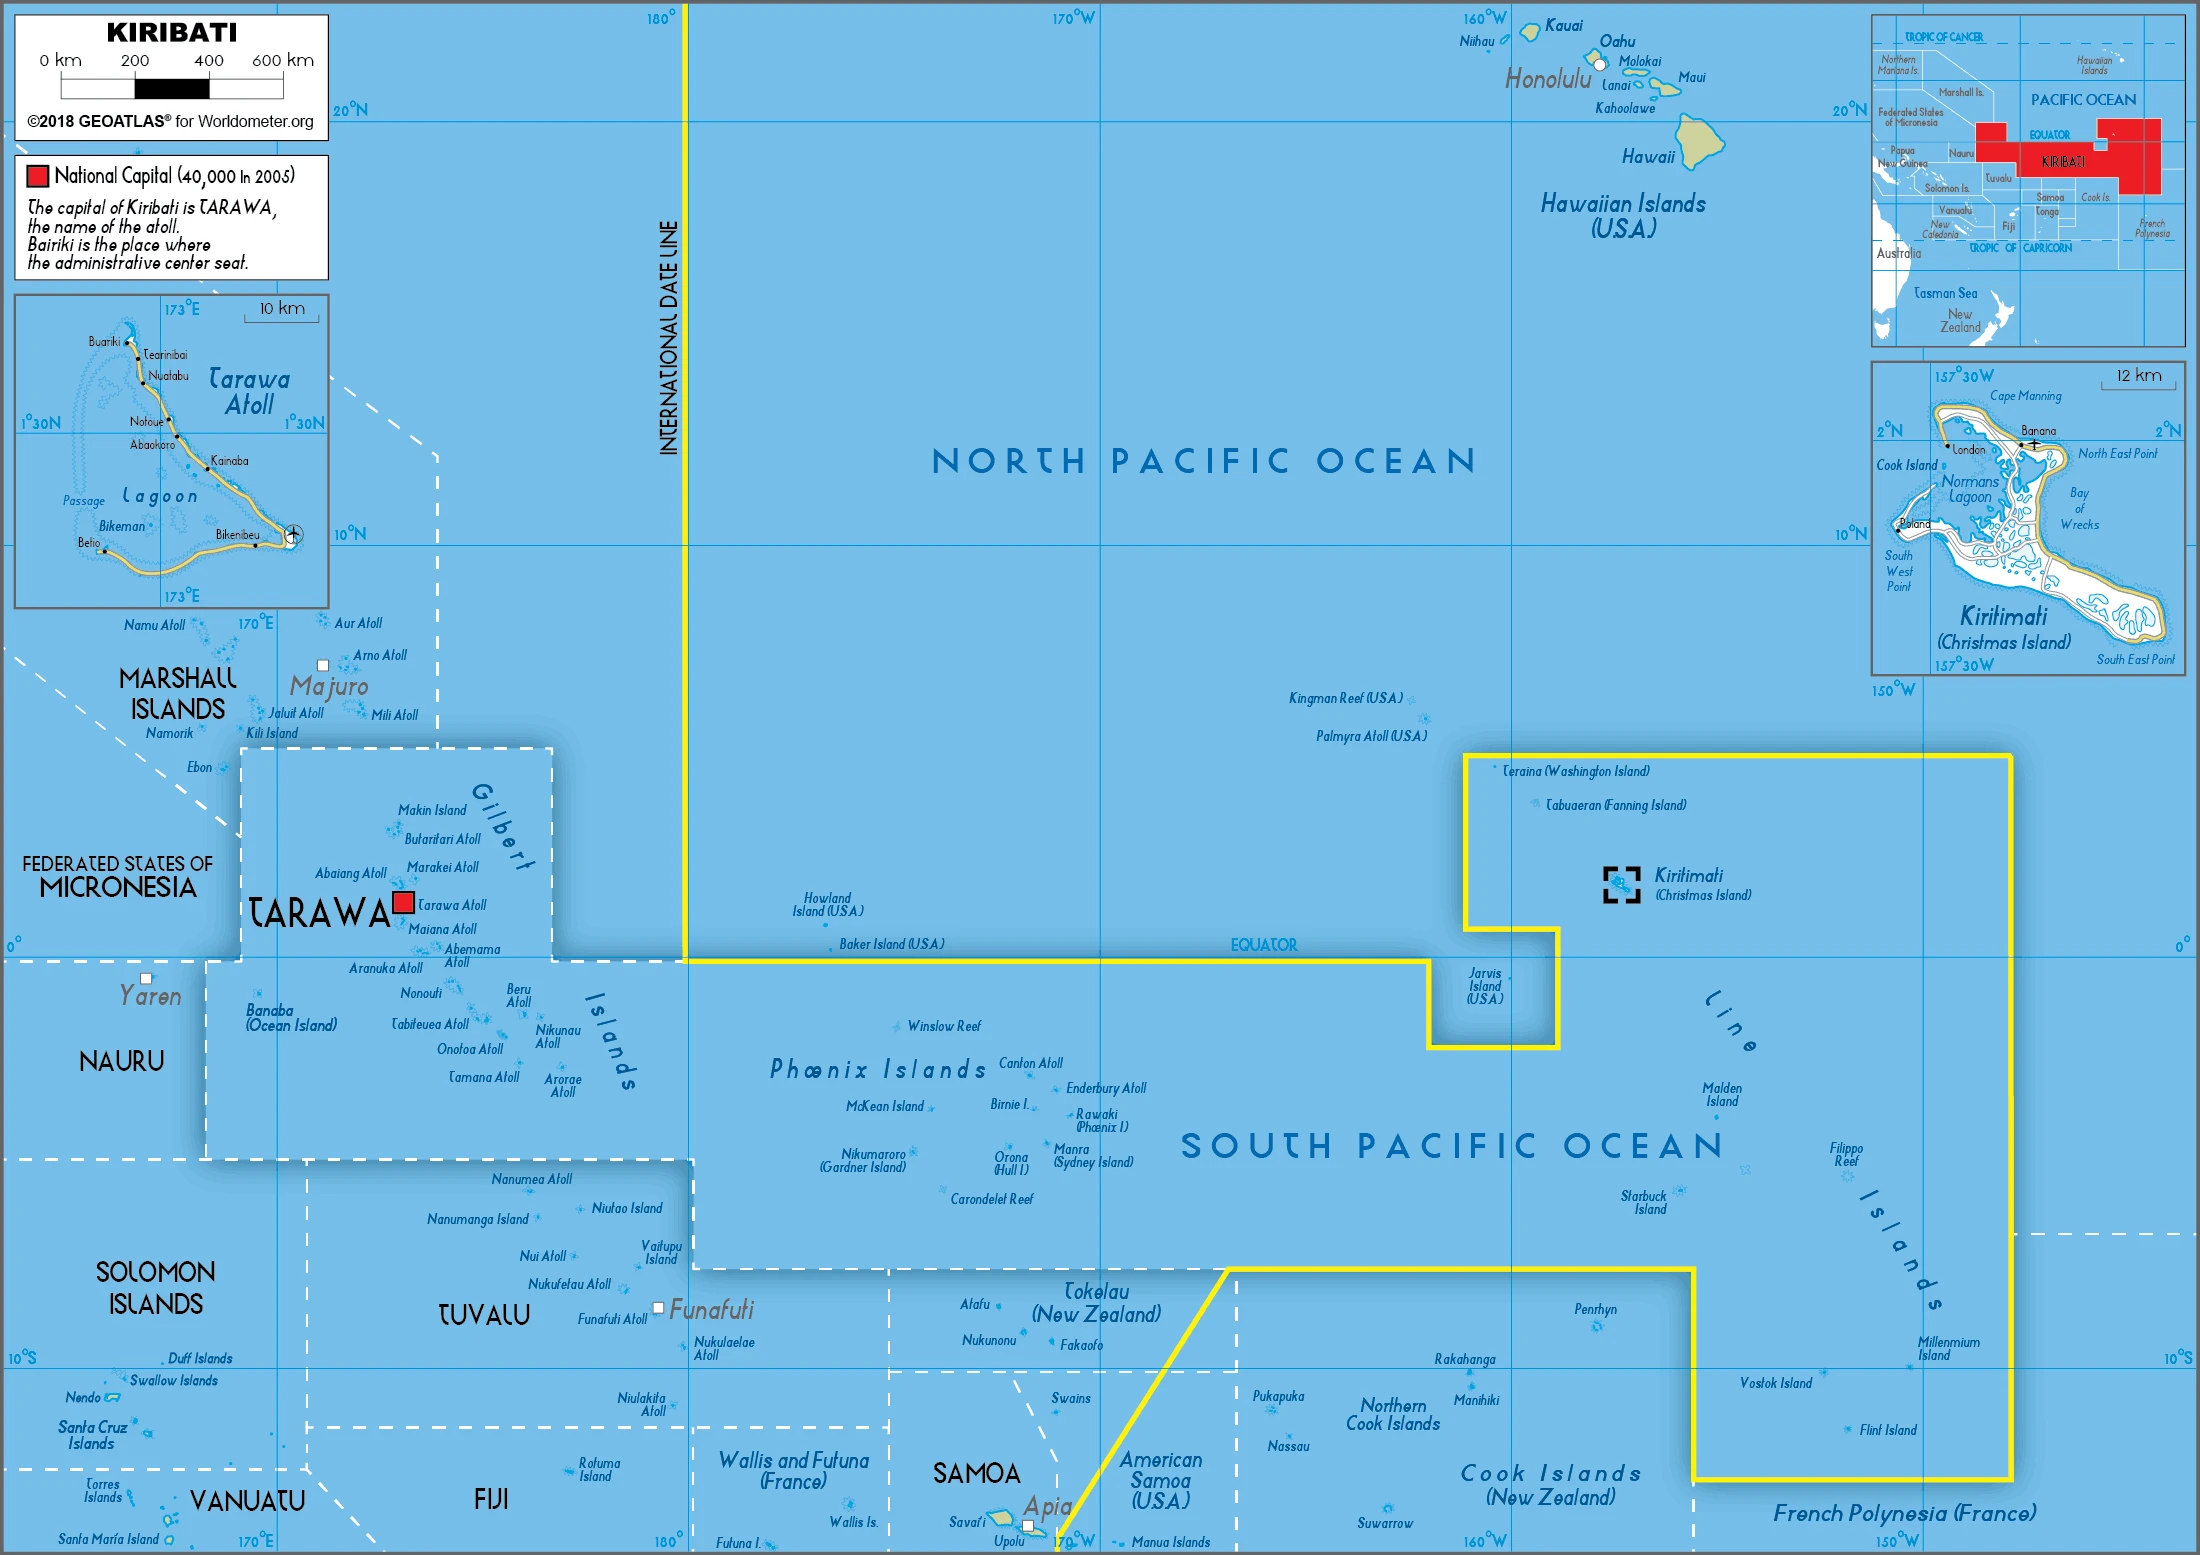 The route plan of the I-Kiribati roadways.